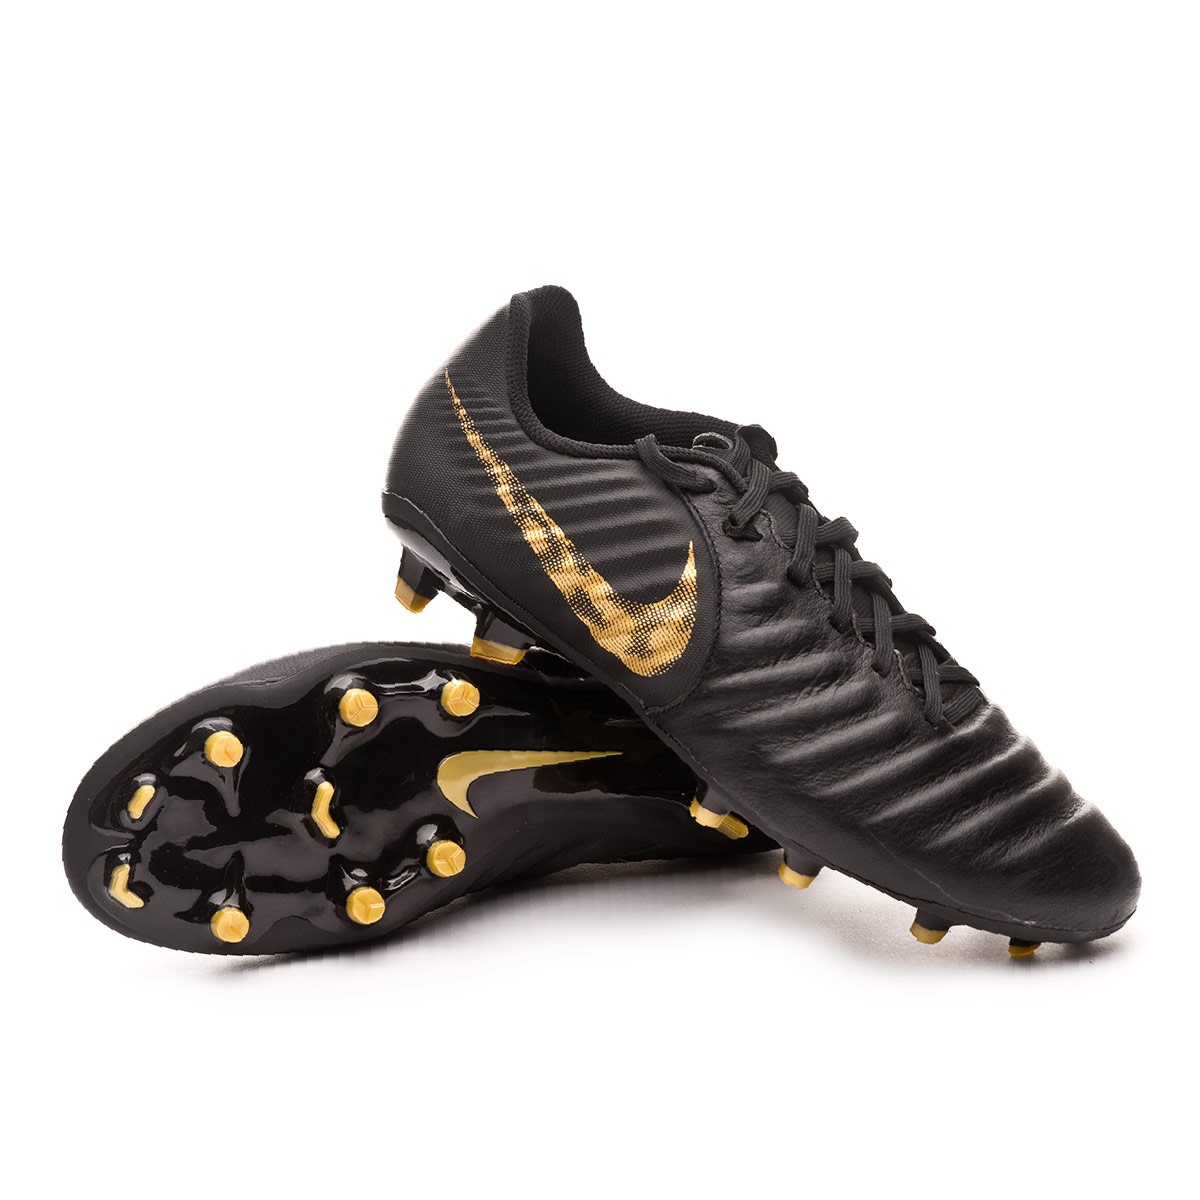 Football Boots Nike Tiempo Legend VII Academy FG Black-Metallic vivid gold  - Football store Fútbol Emotion